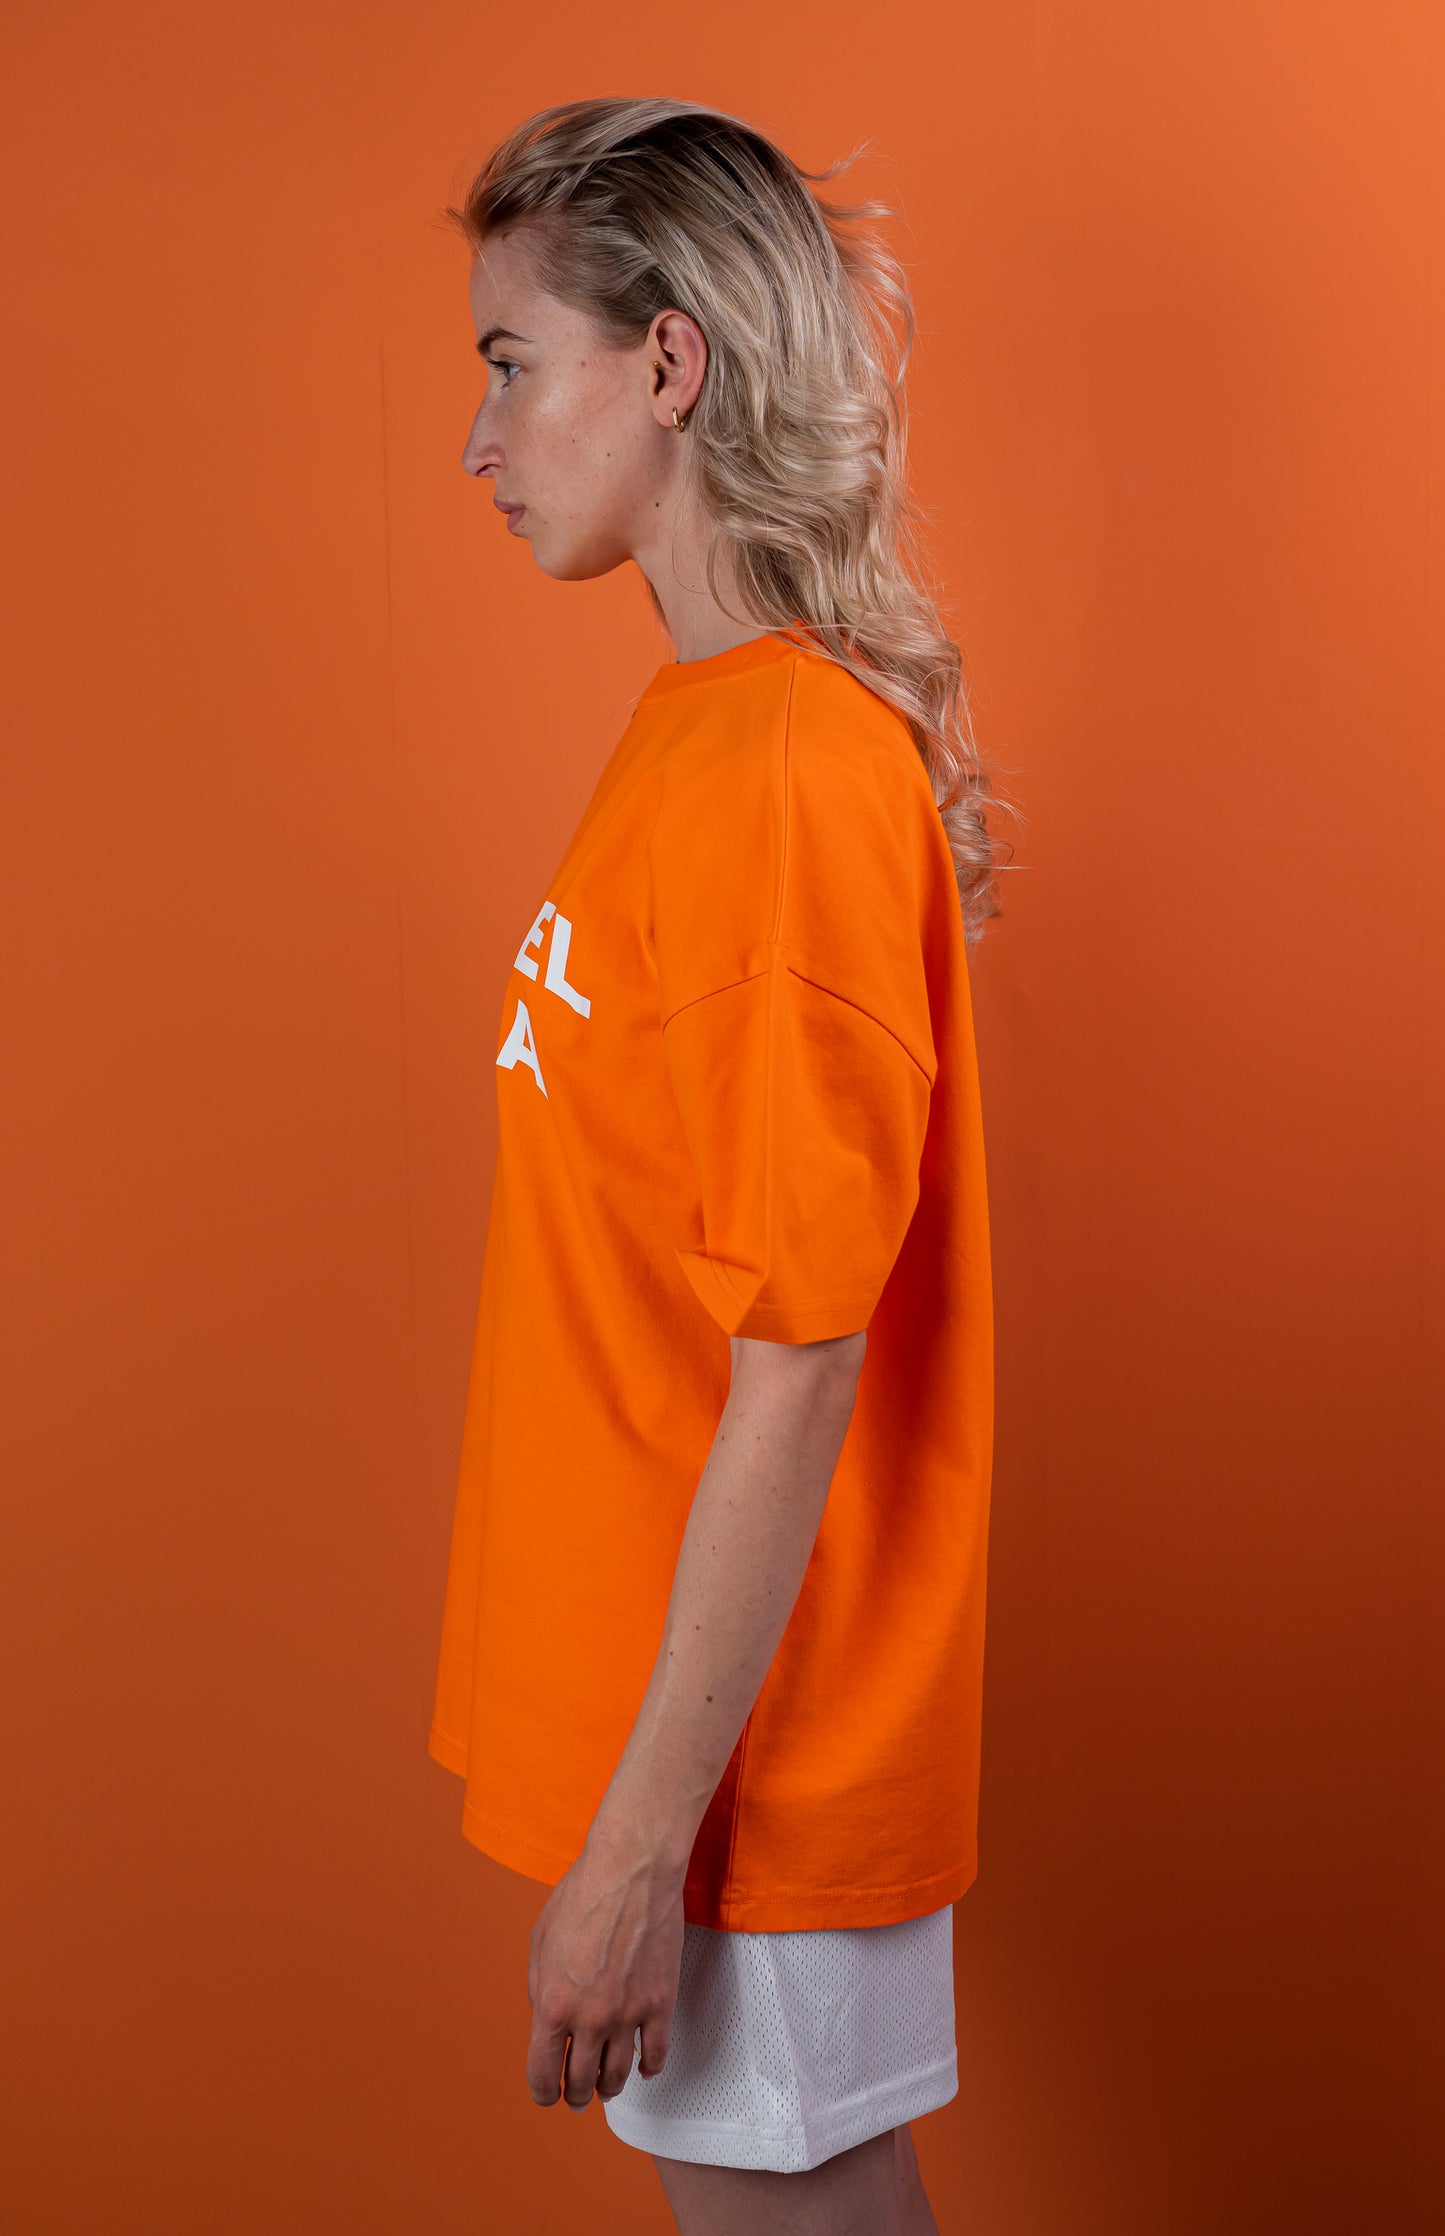 Model wearing a orange oversize tshirt with whitewavy brand name design